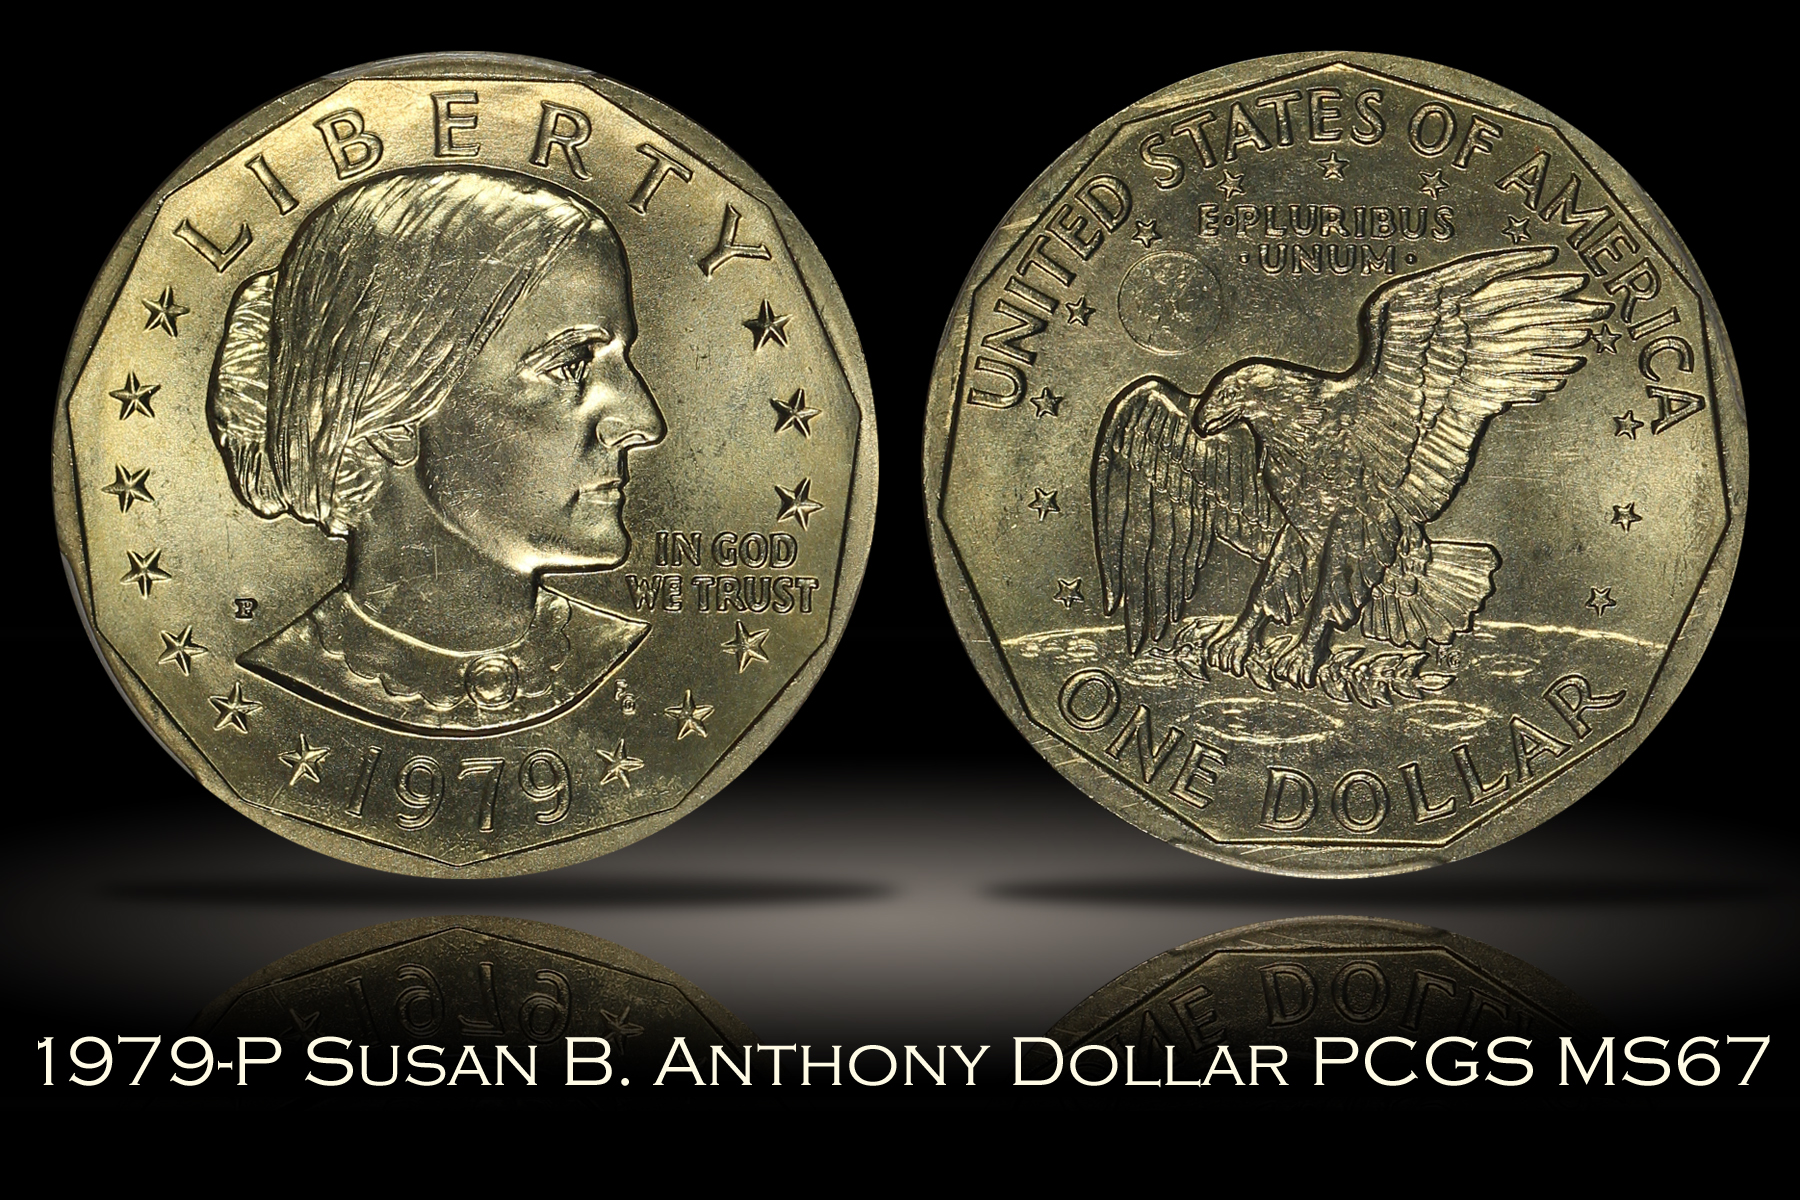 Michael Kittle Rare Coins - 1979-P Susan B. Anthony Dollar PCGS MS671800 x 1200